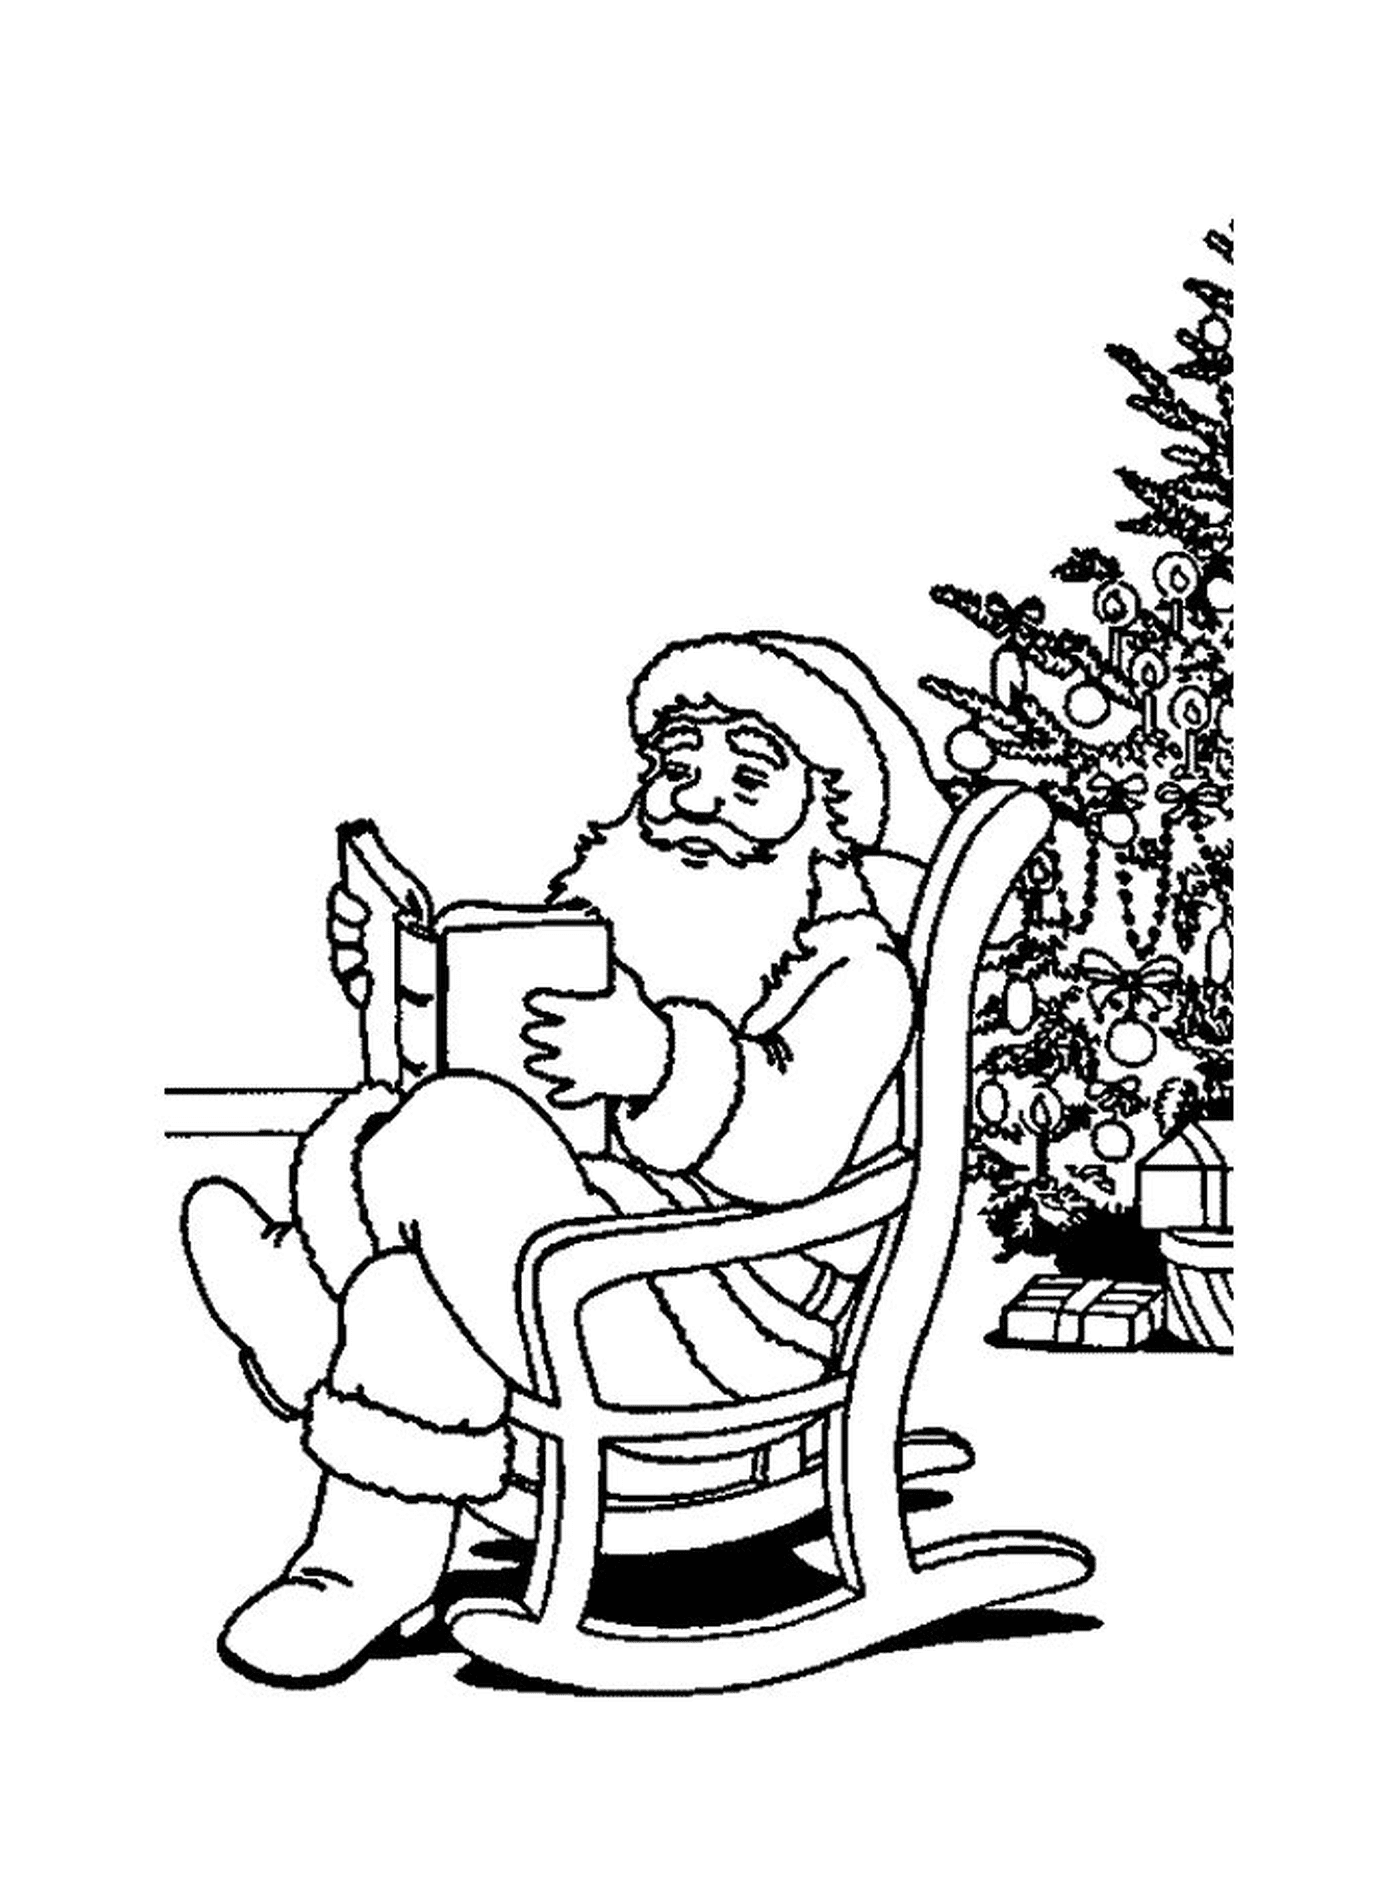  Santa reading a book by a tree 